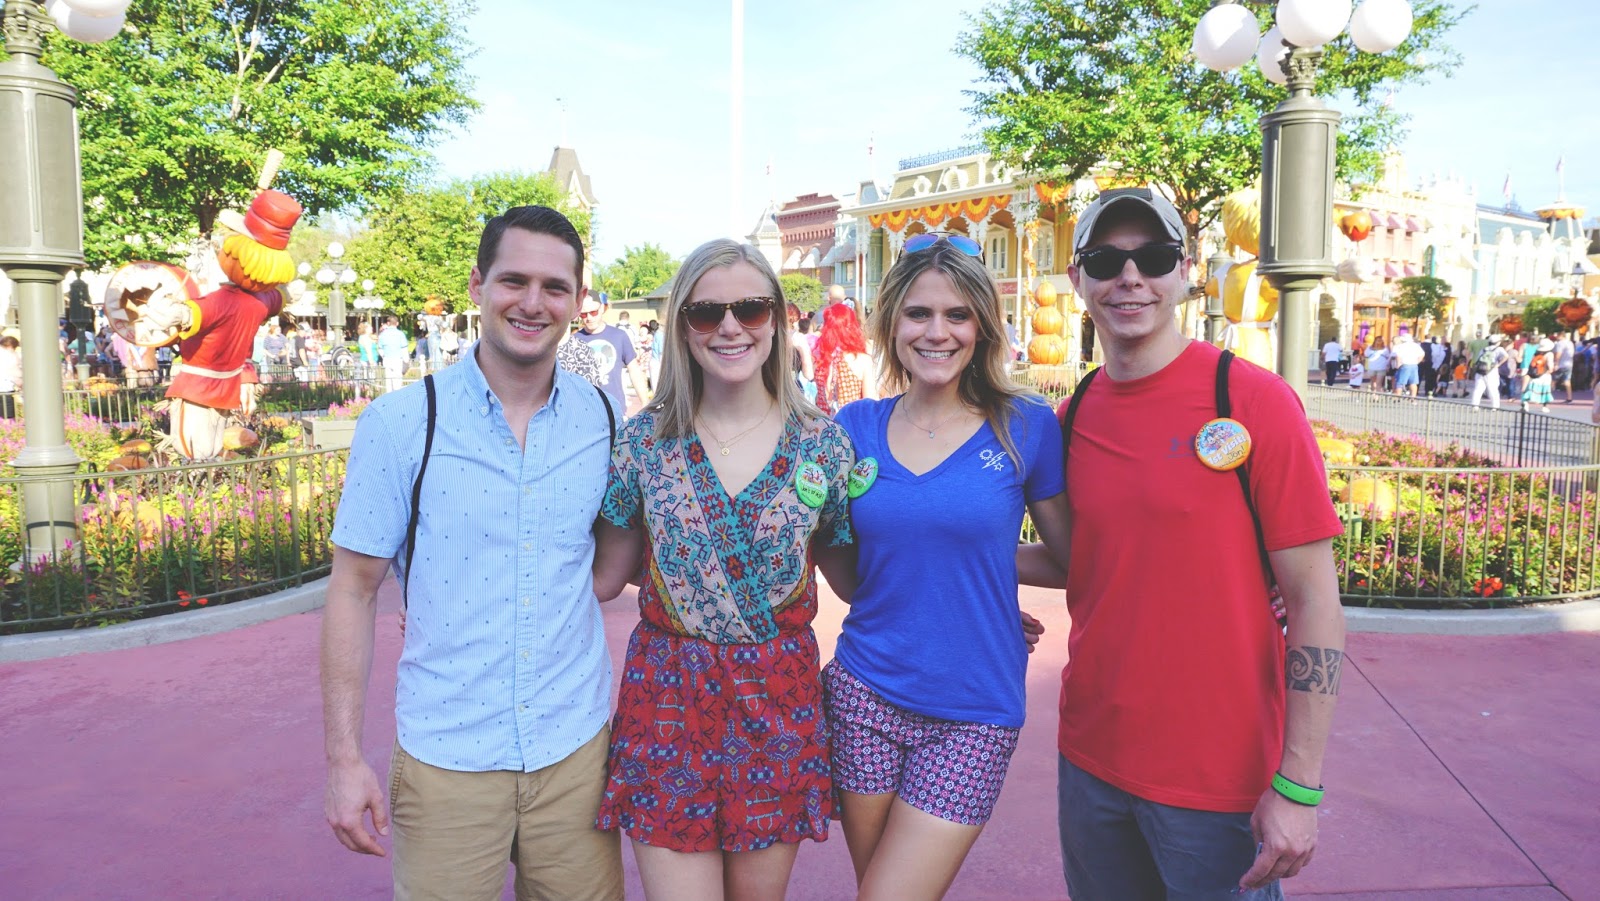 Magic Kingdom in Disney World, Florida